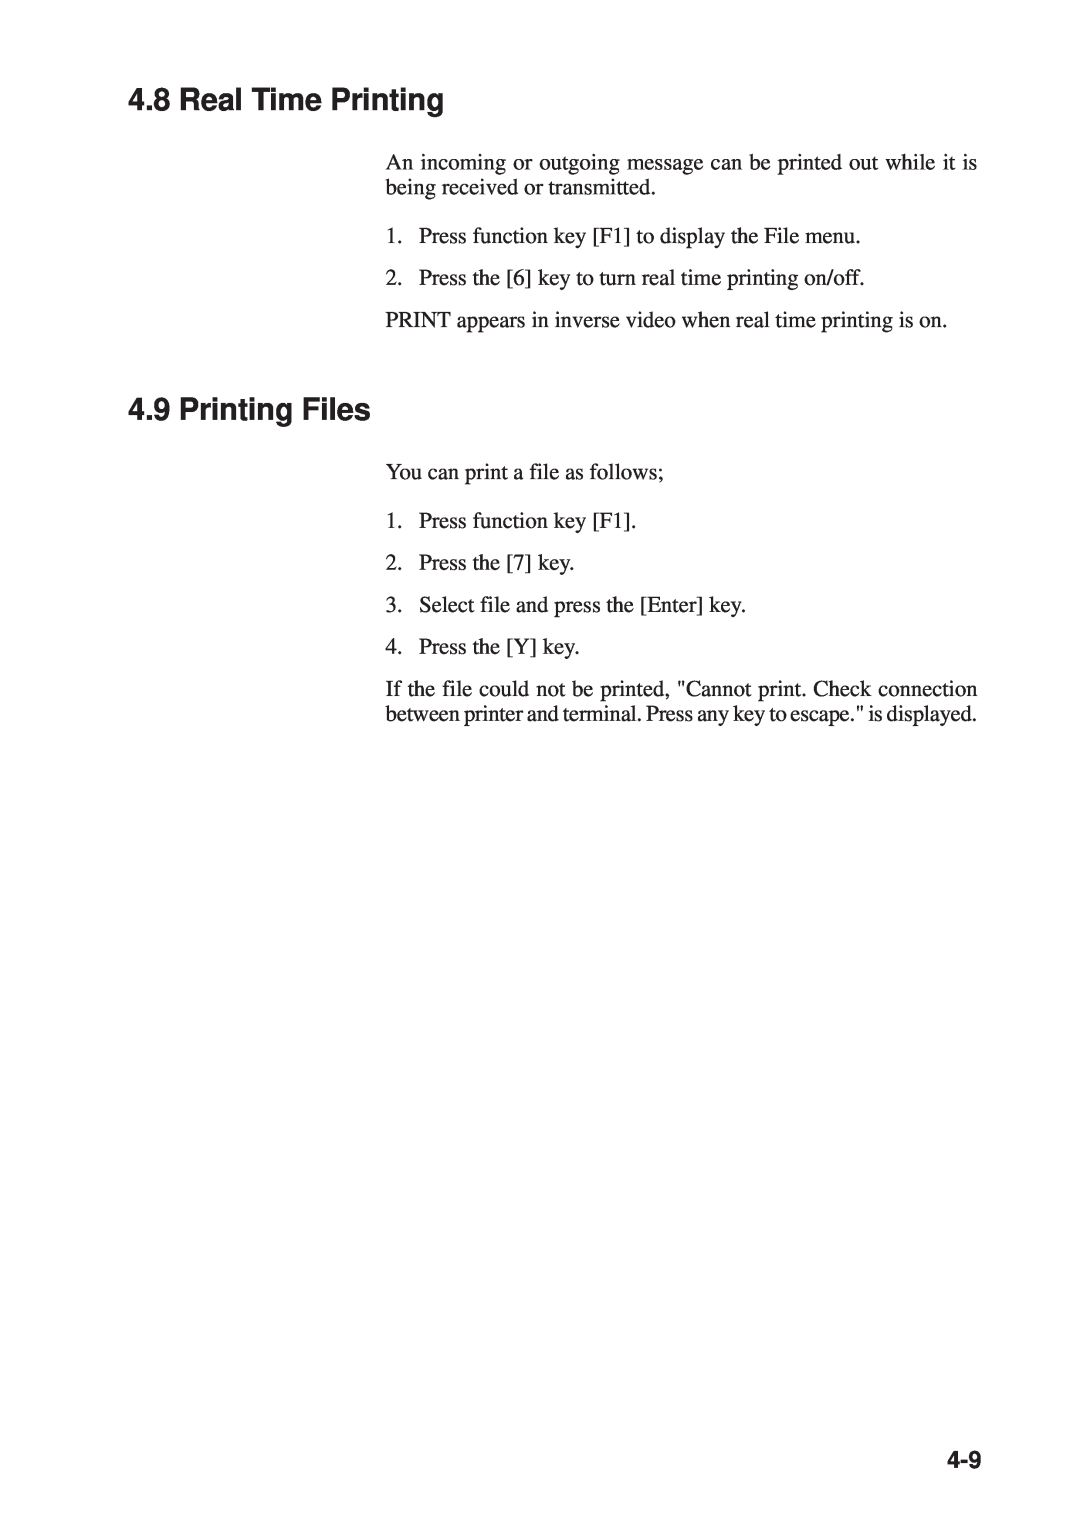 Furuno RC-1500-1T manual Real Time Printing, Printing Files 